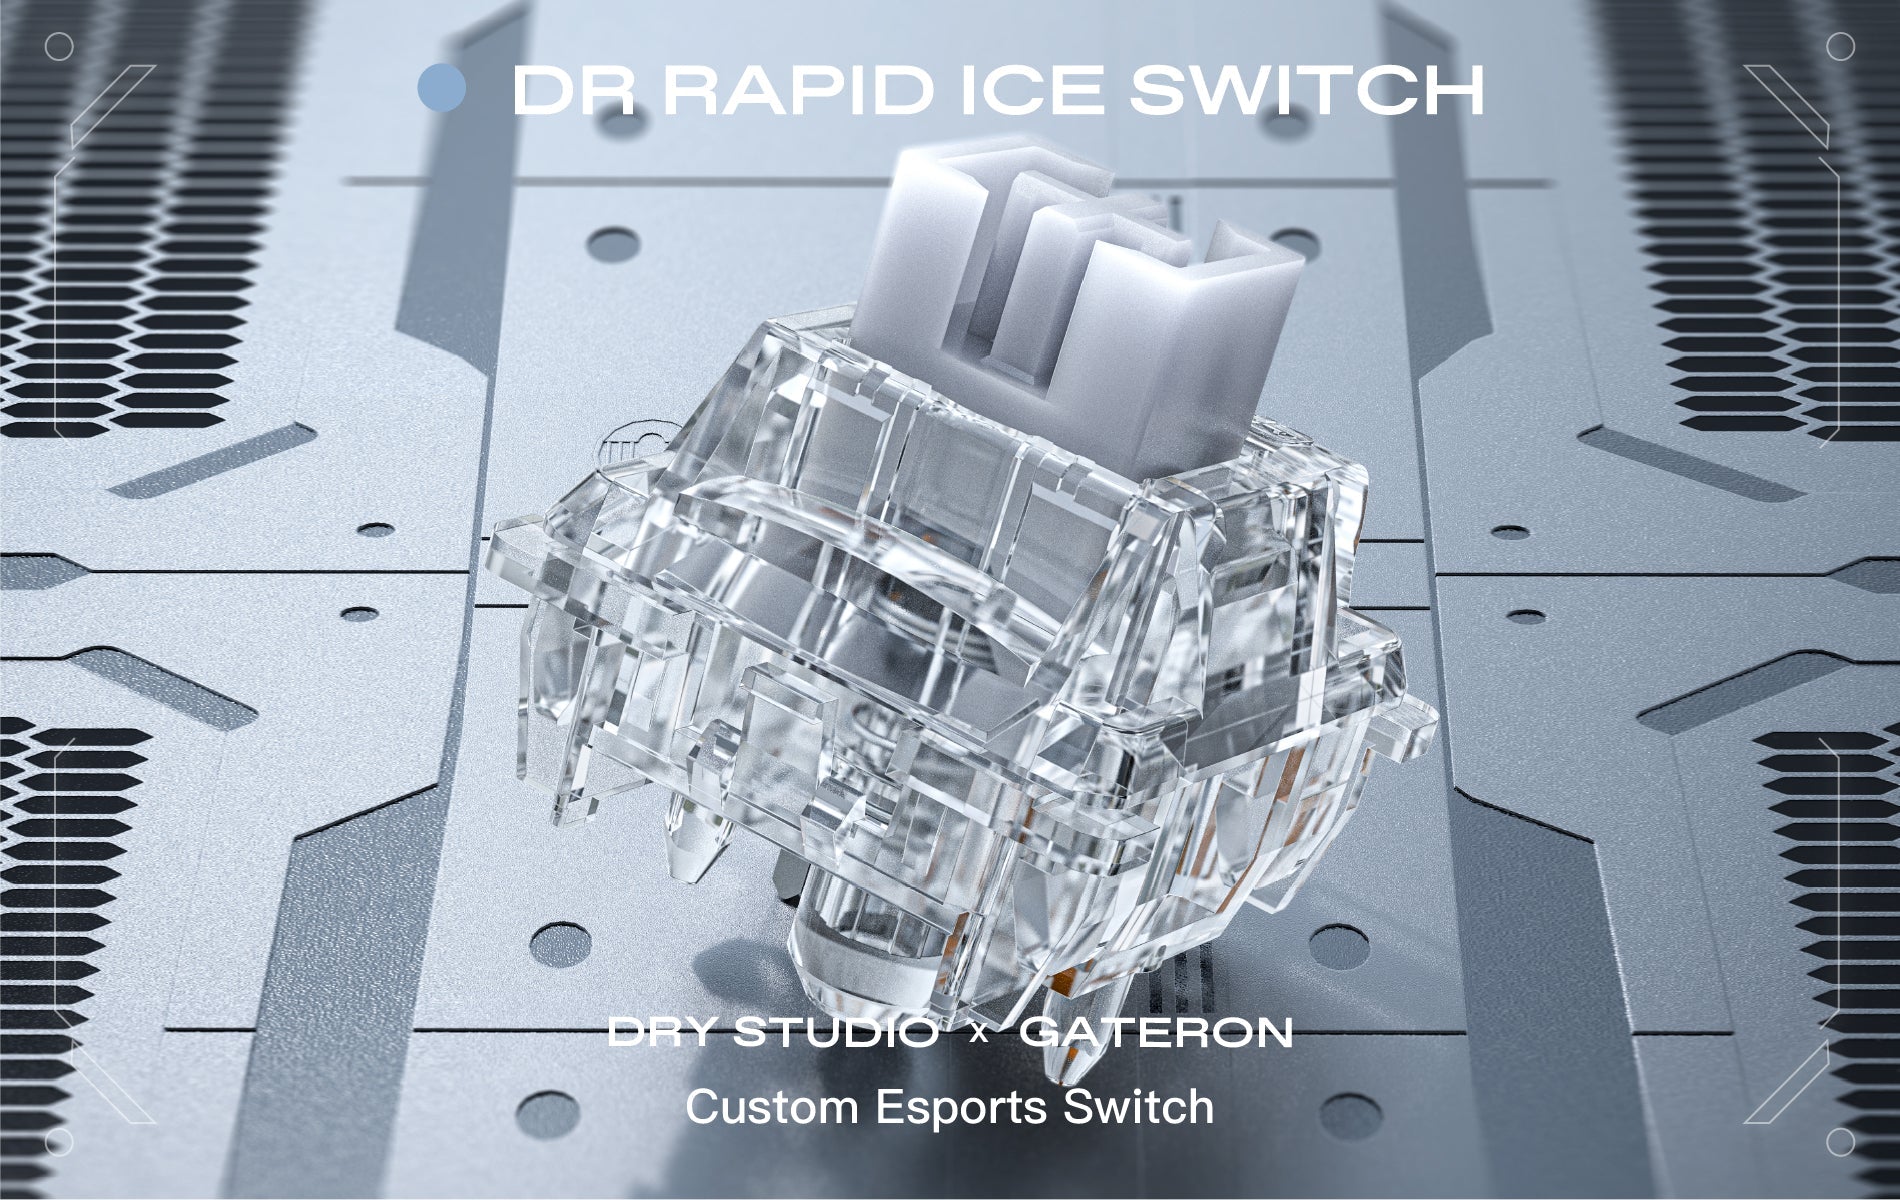 [DRY STUDIO x Gateron Custom Made] DR Rapid Ice Switch